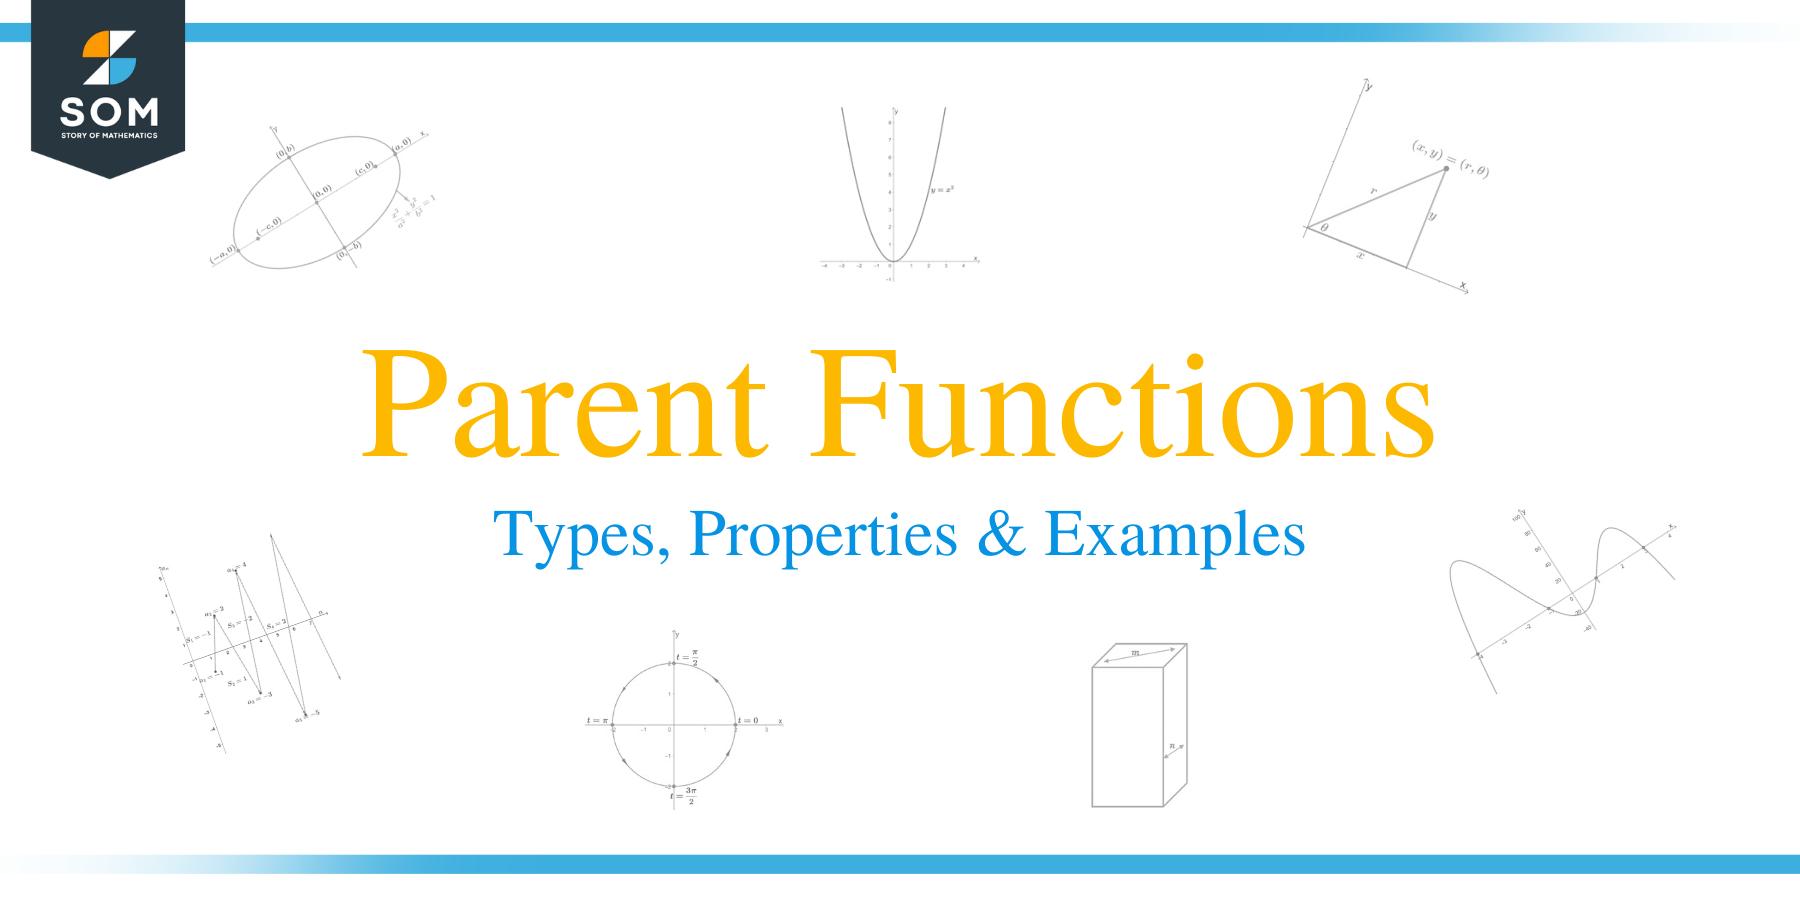 Parent Functions